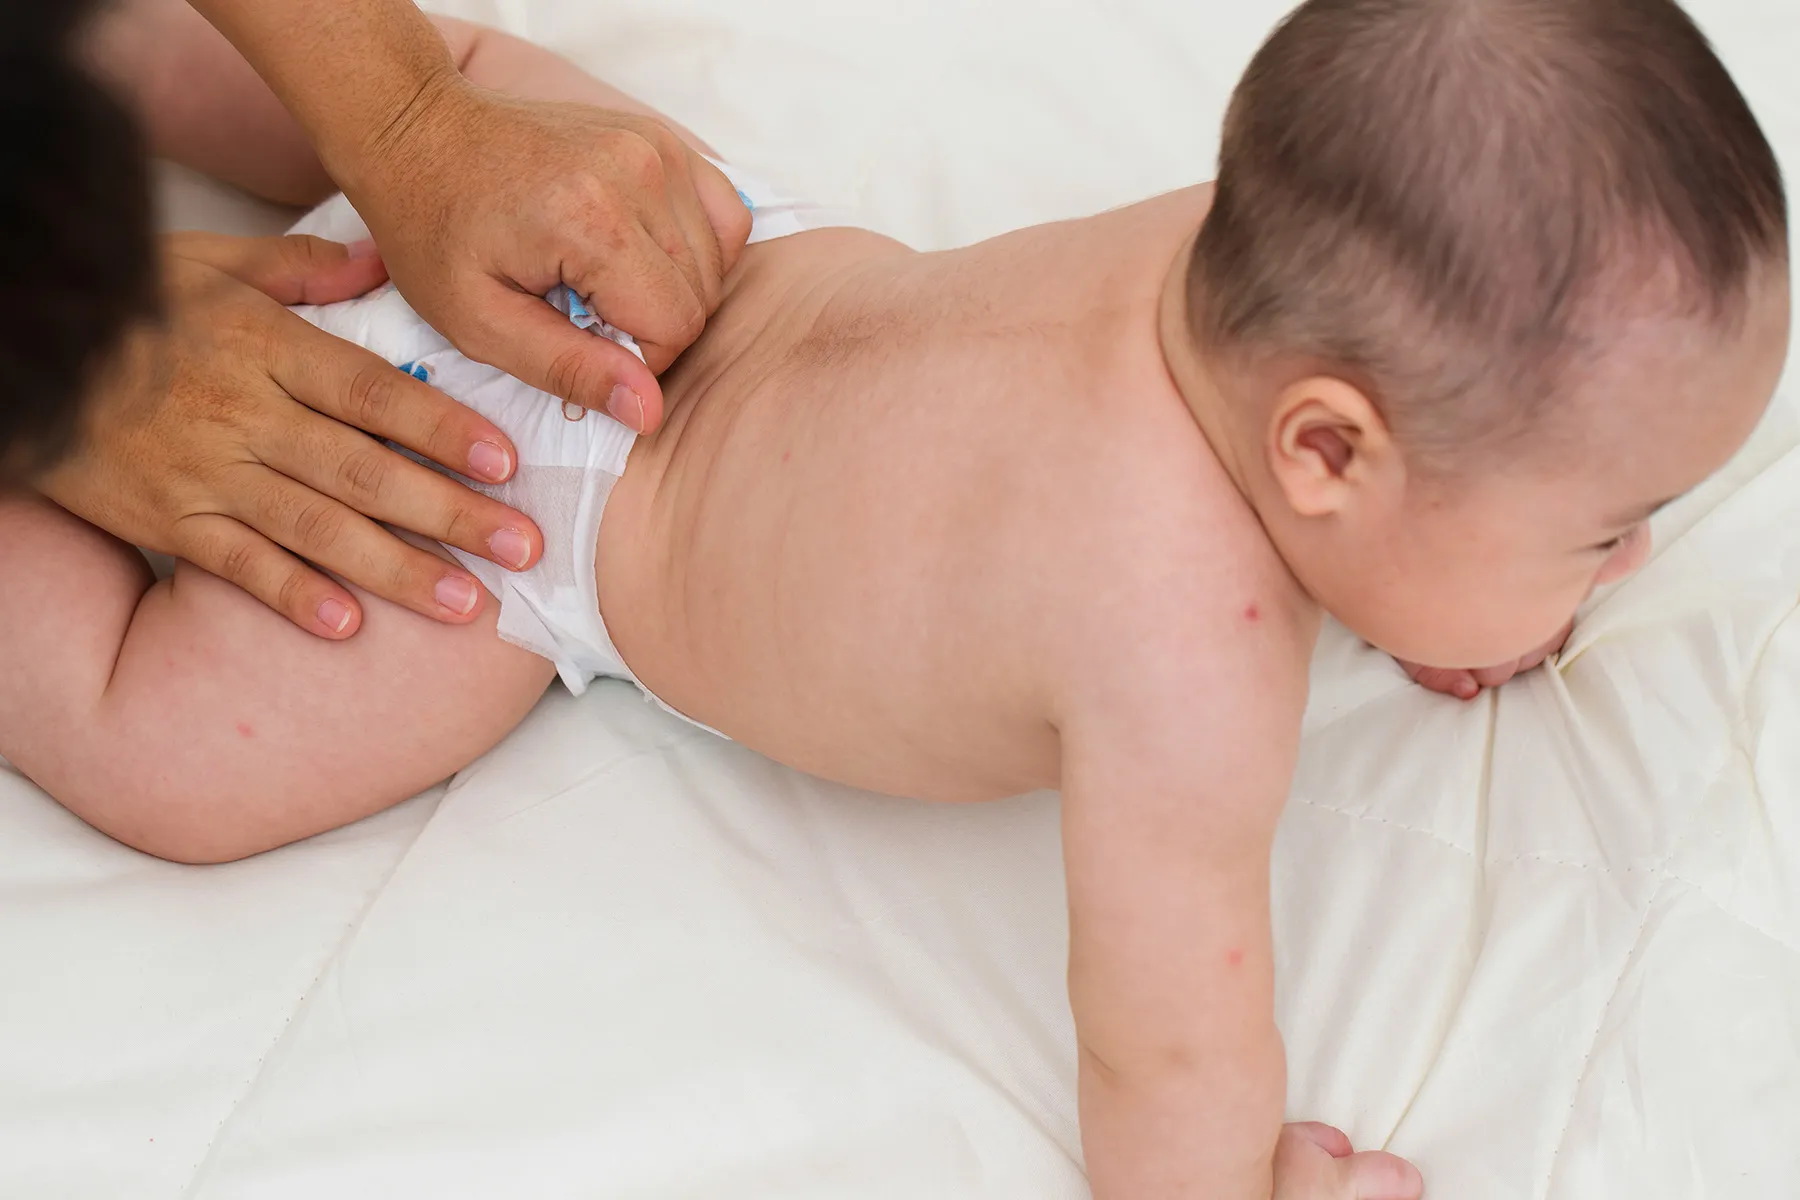 Hundreds of New Viruses Present in Child Diapers